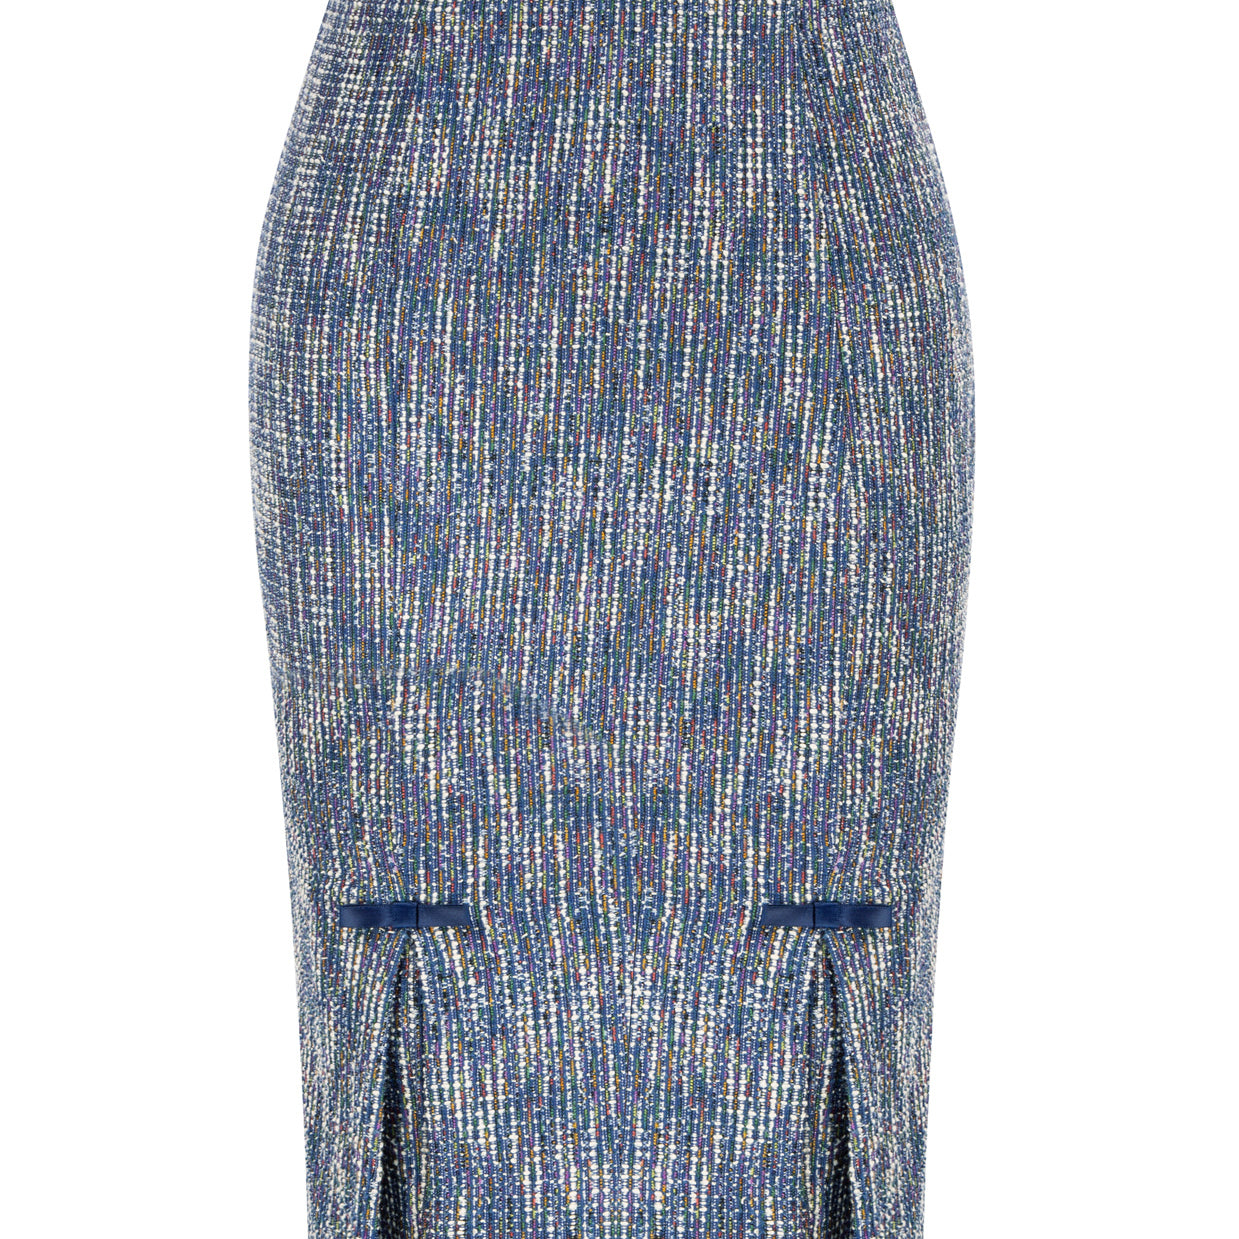 Seckill Offer⌛Vintage Back Slit Skirt High Waist Kickpleats Decorated Pencil Skirt